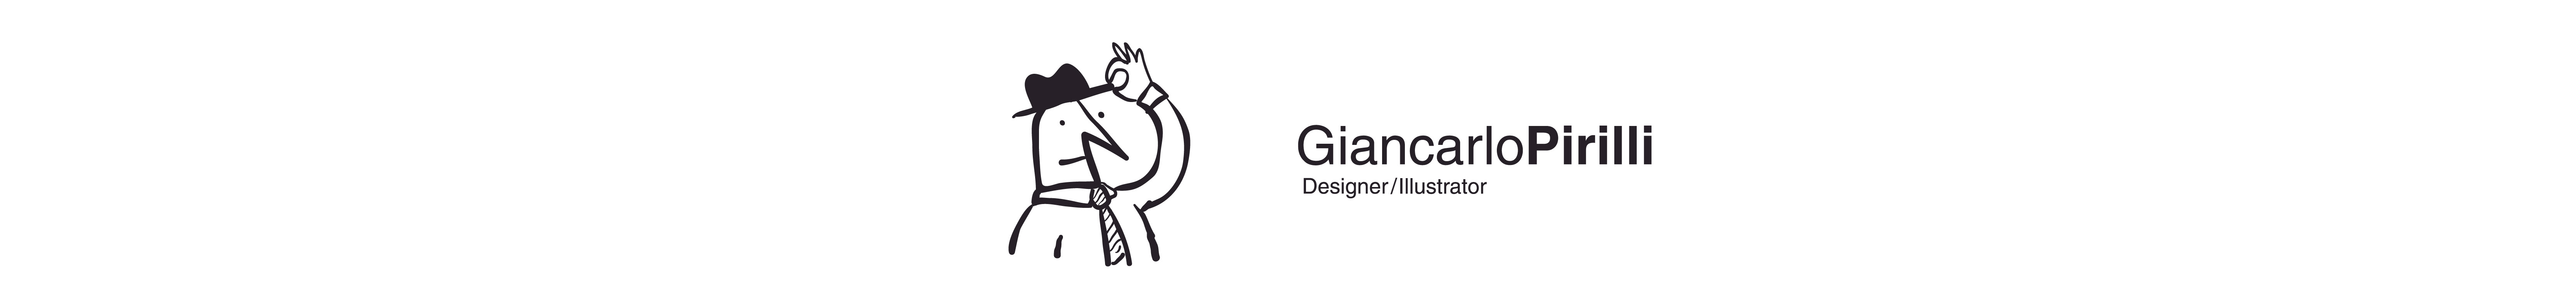 Giancarlo Pirilli's profile banner